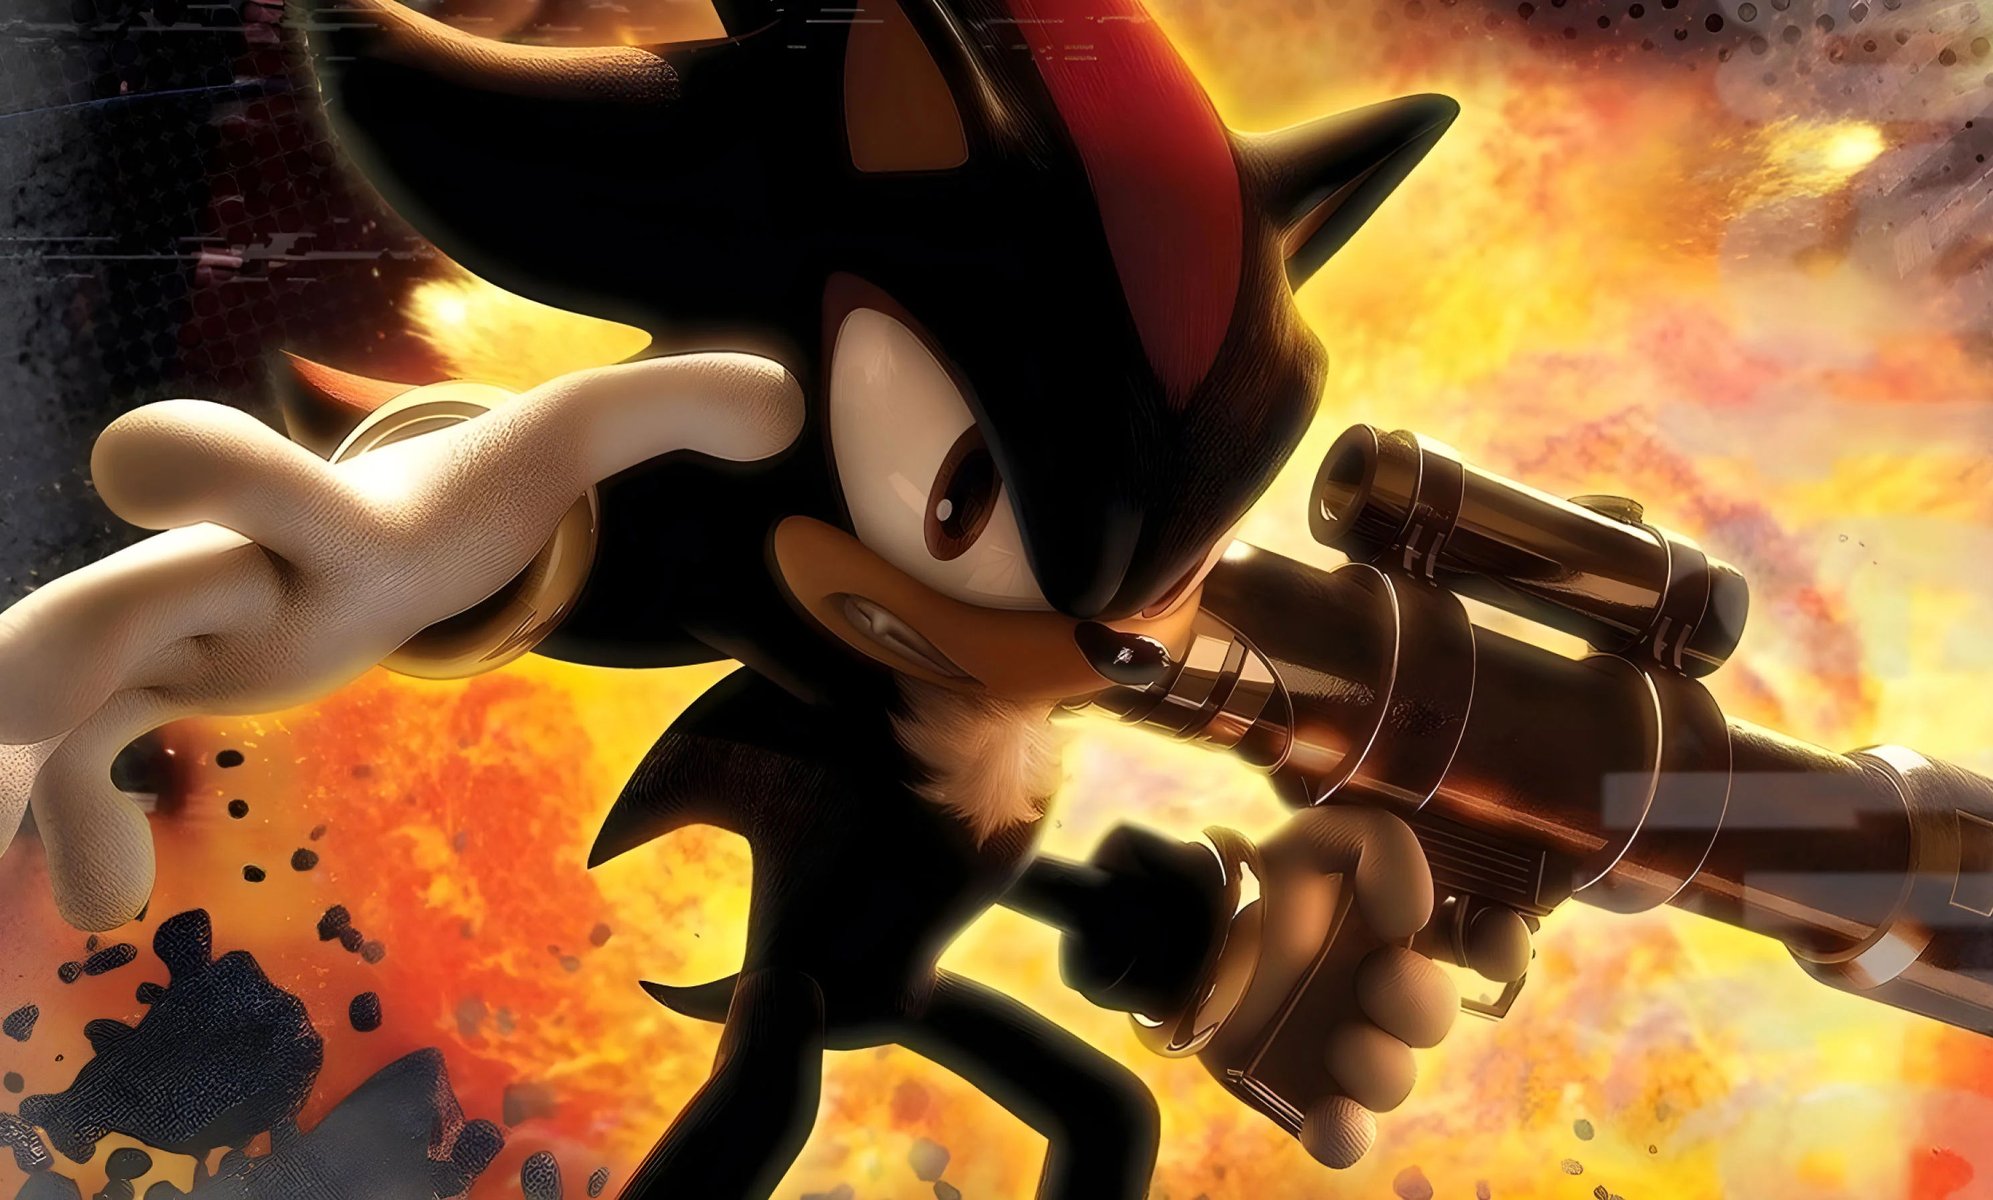 Shadow the hedgehog (Sonic games)